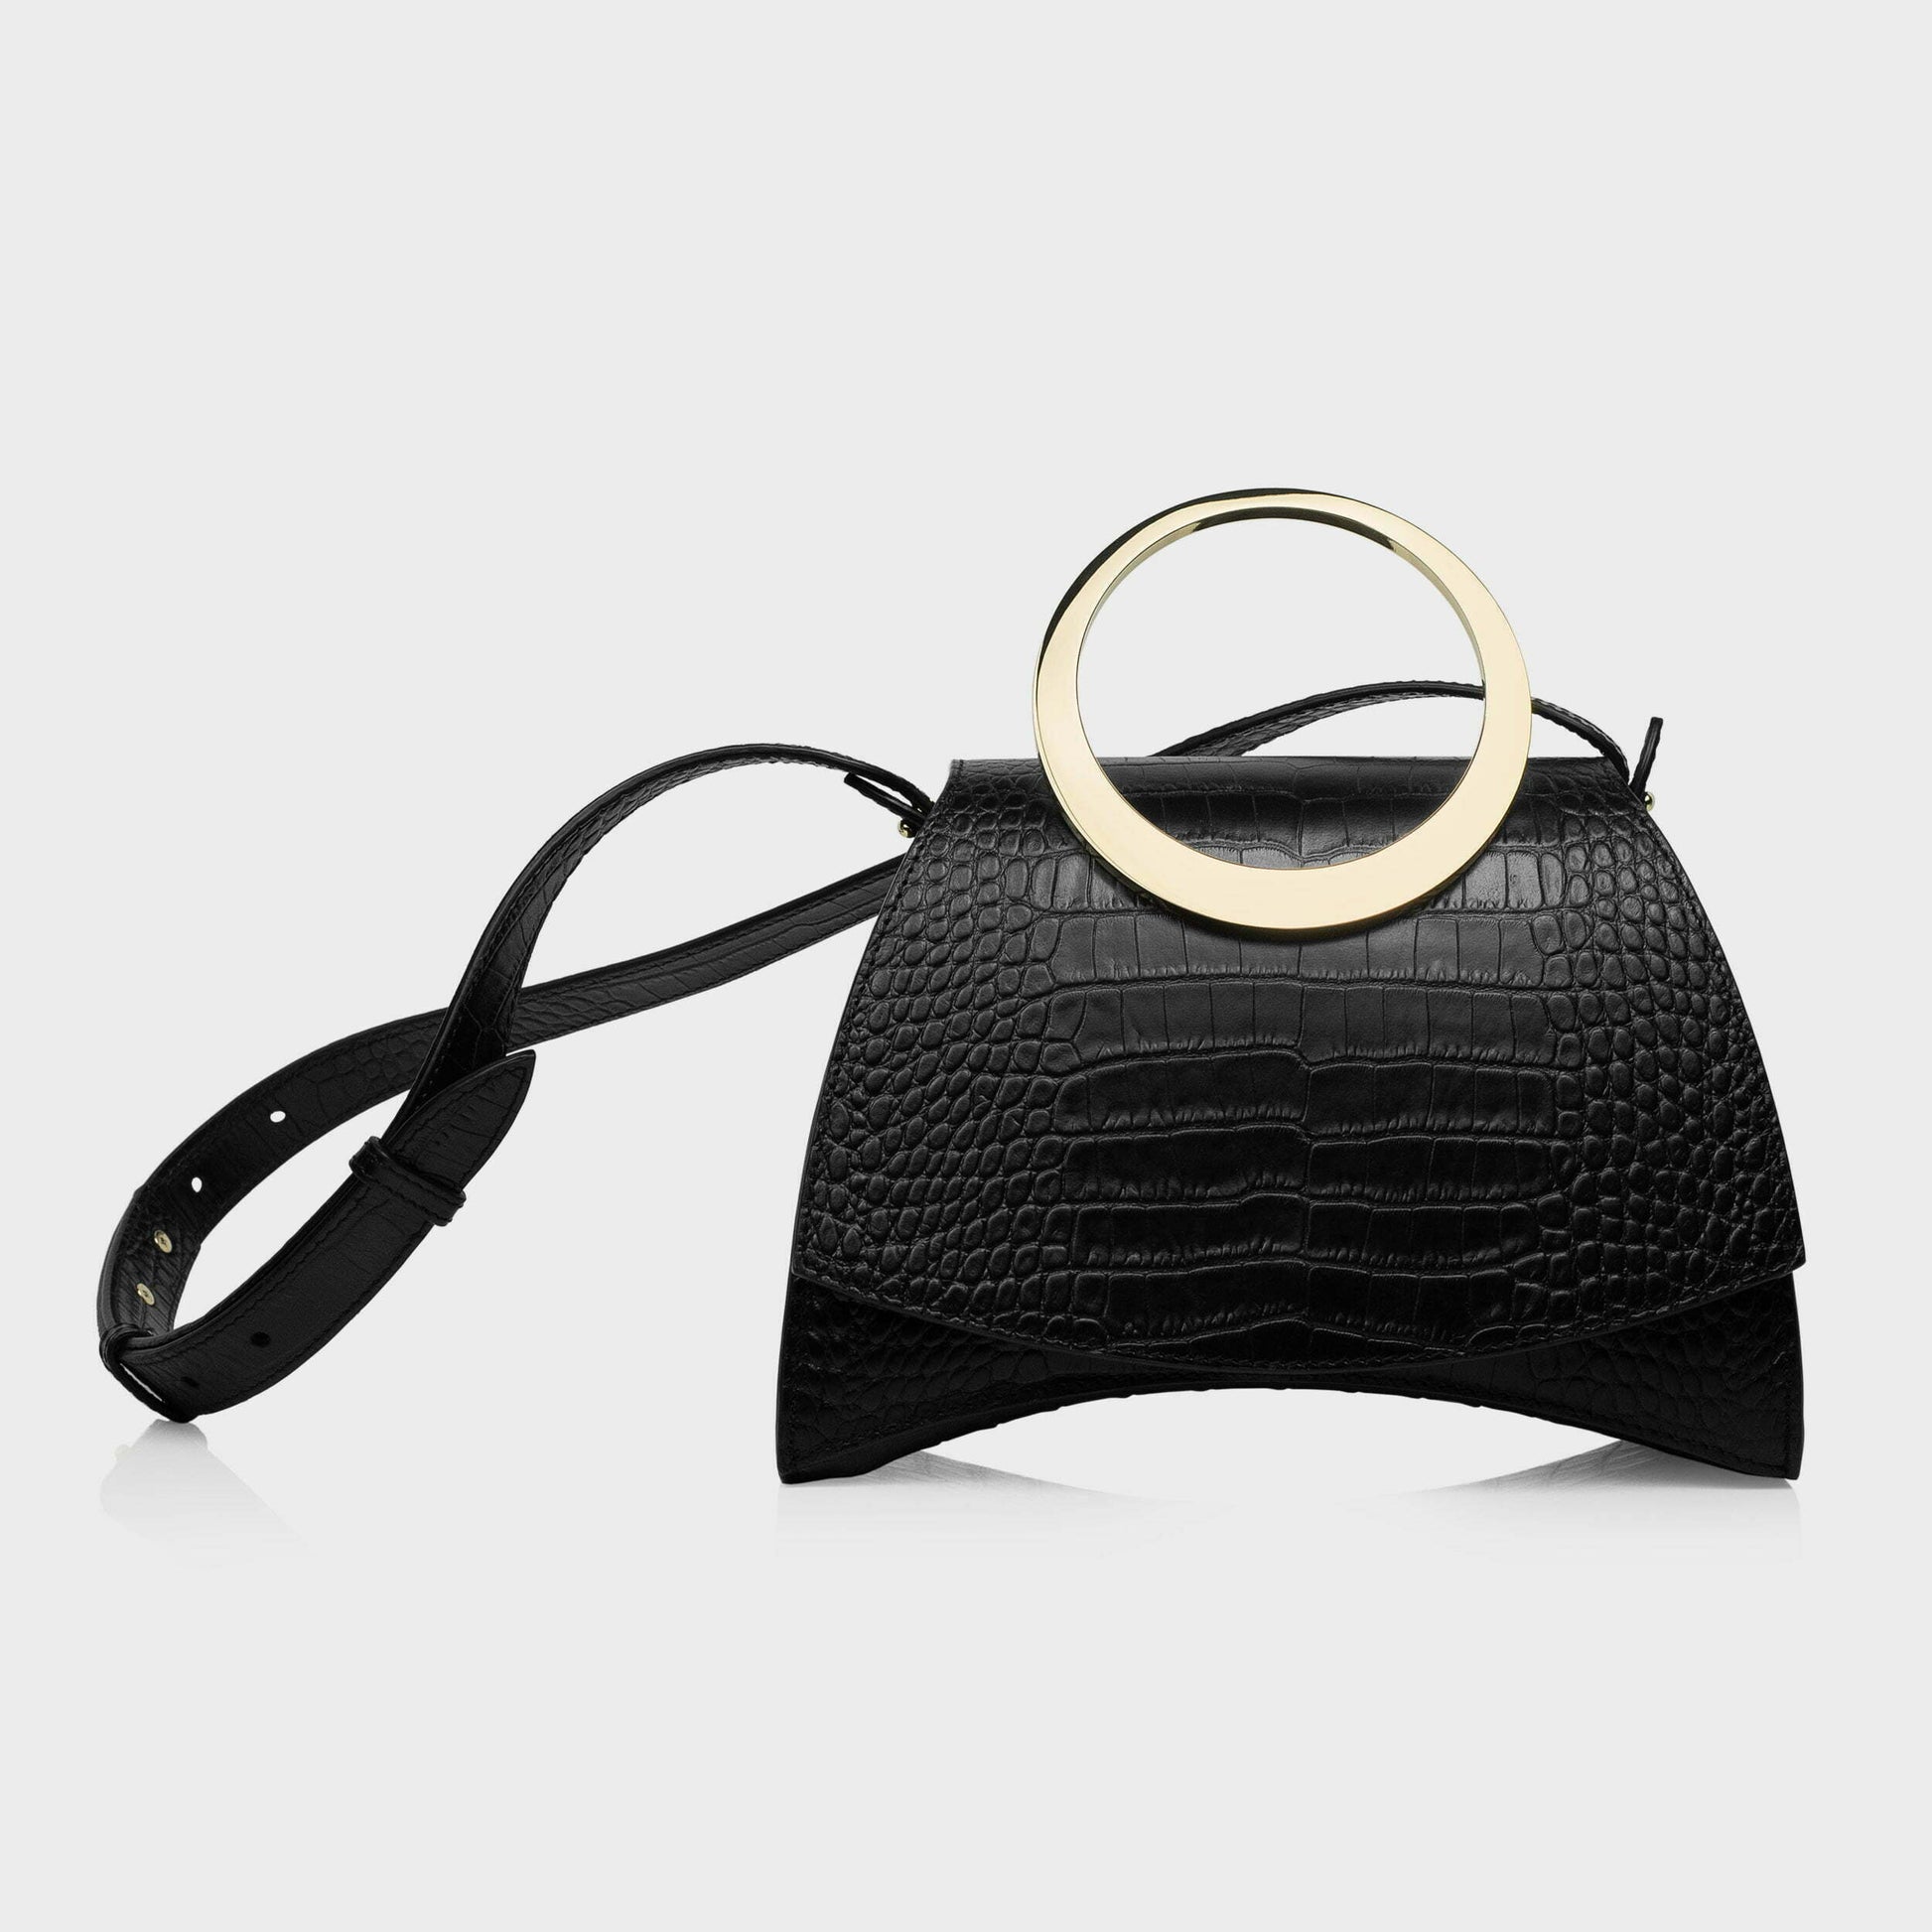 Maestoso Enso Mini Black Croco Leather Handbag